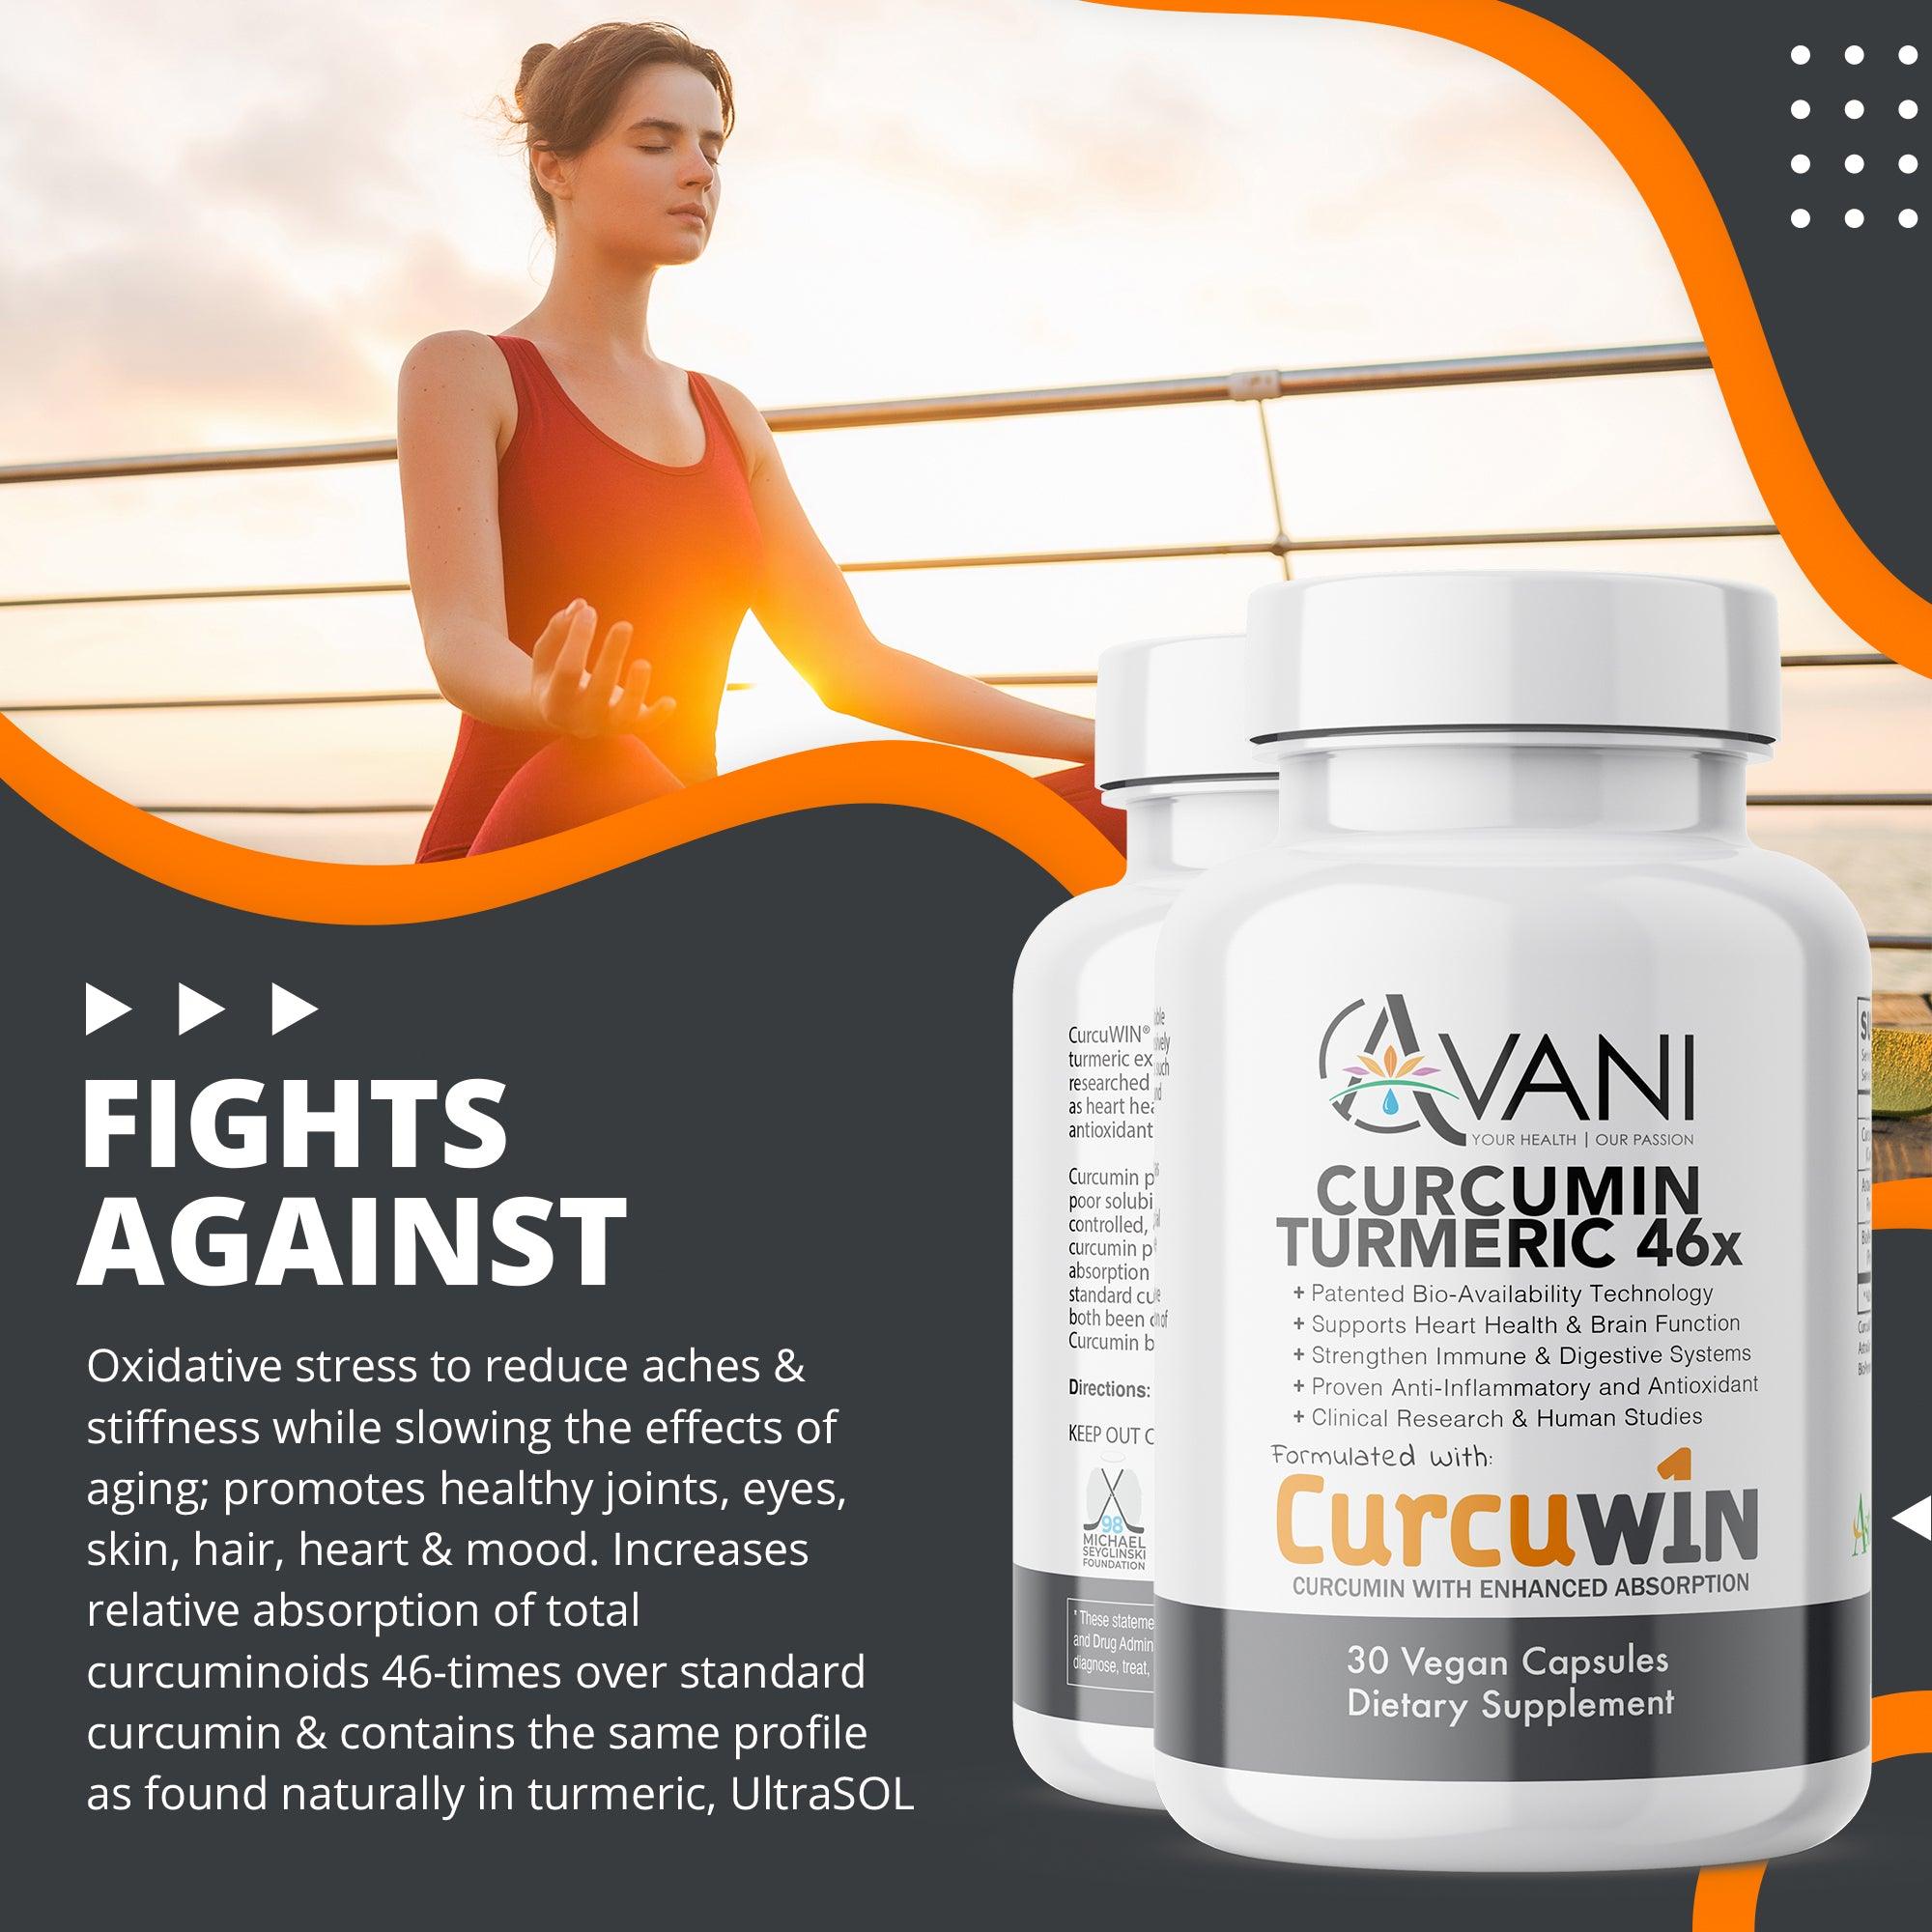 CurcuWIN® Turmeric Extract with 46x Absorption - Avani Wellness